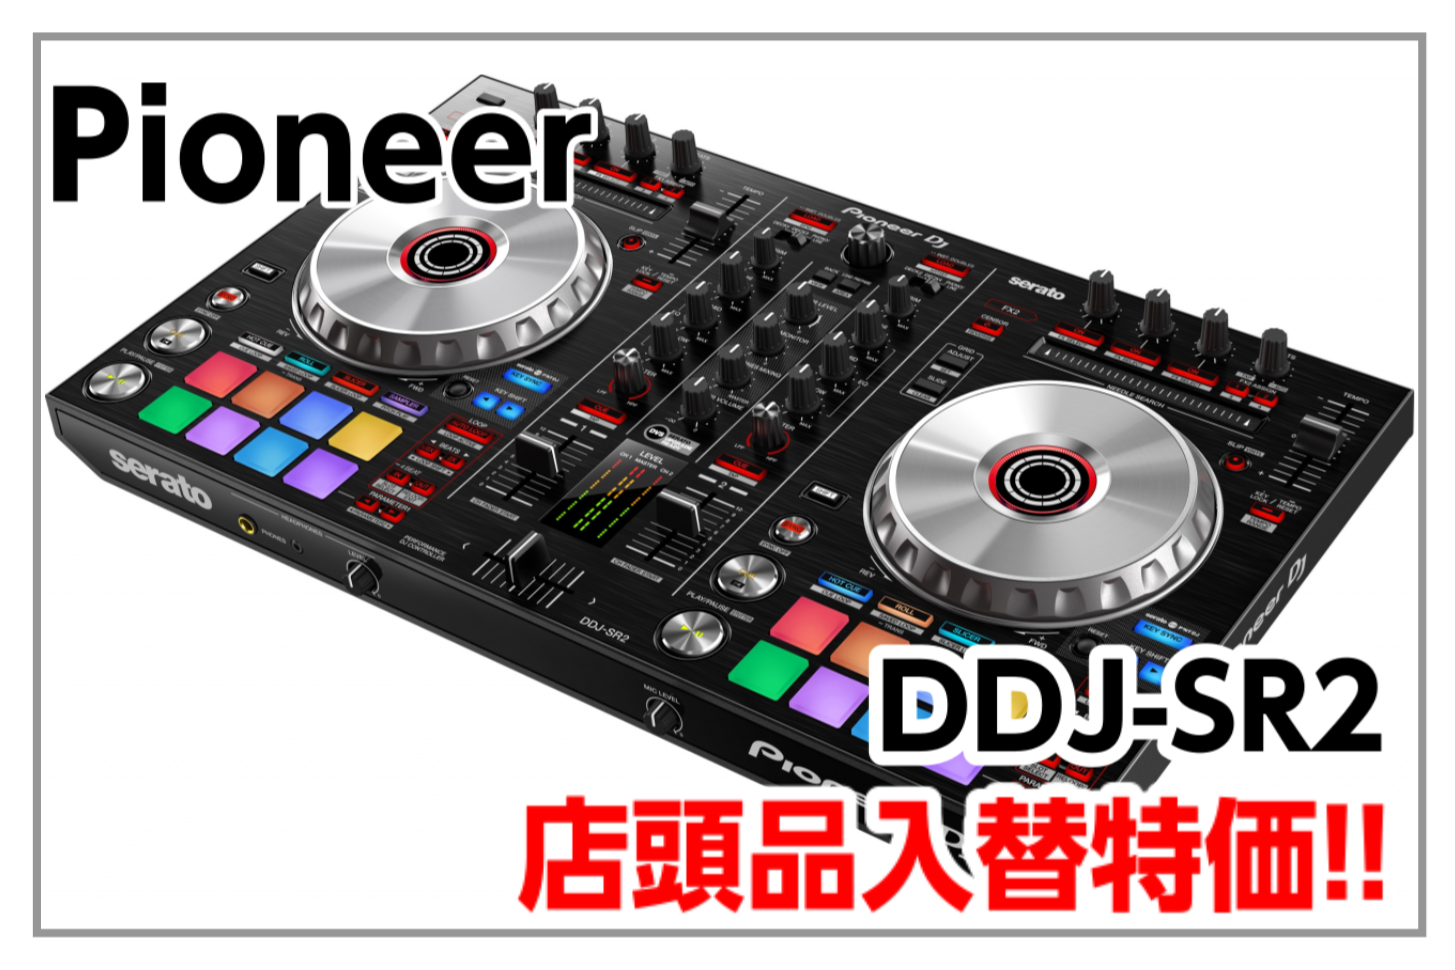 *Pioneer DDJ-SR2 展示品入替の為 大特価!! SERATO DJ PROのKEY SYNC、KEY SHIFTを瞬時に操作できる専用ボタンを搭載した、より個性的な楽曲アレンジを可能にするDJコントローラーが[!!展示品入替の為特価!!!!] **MENU [#a:title=商品紹介 […]